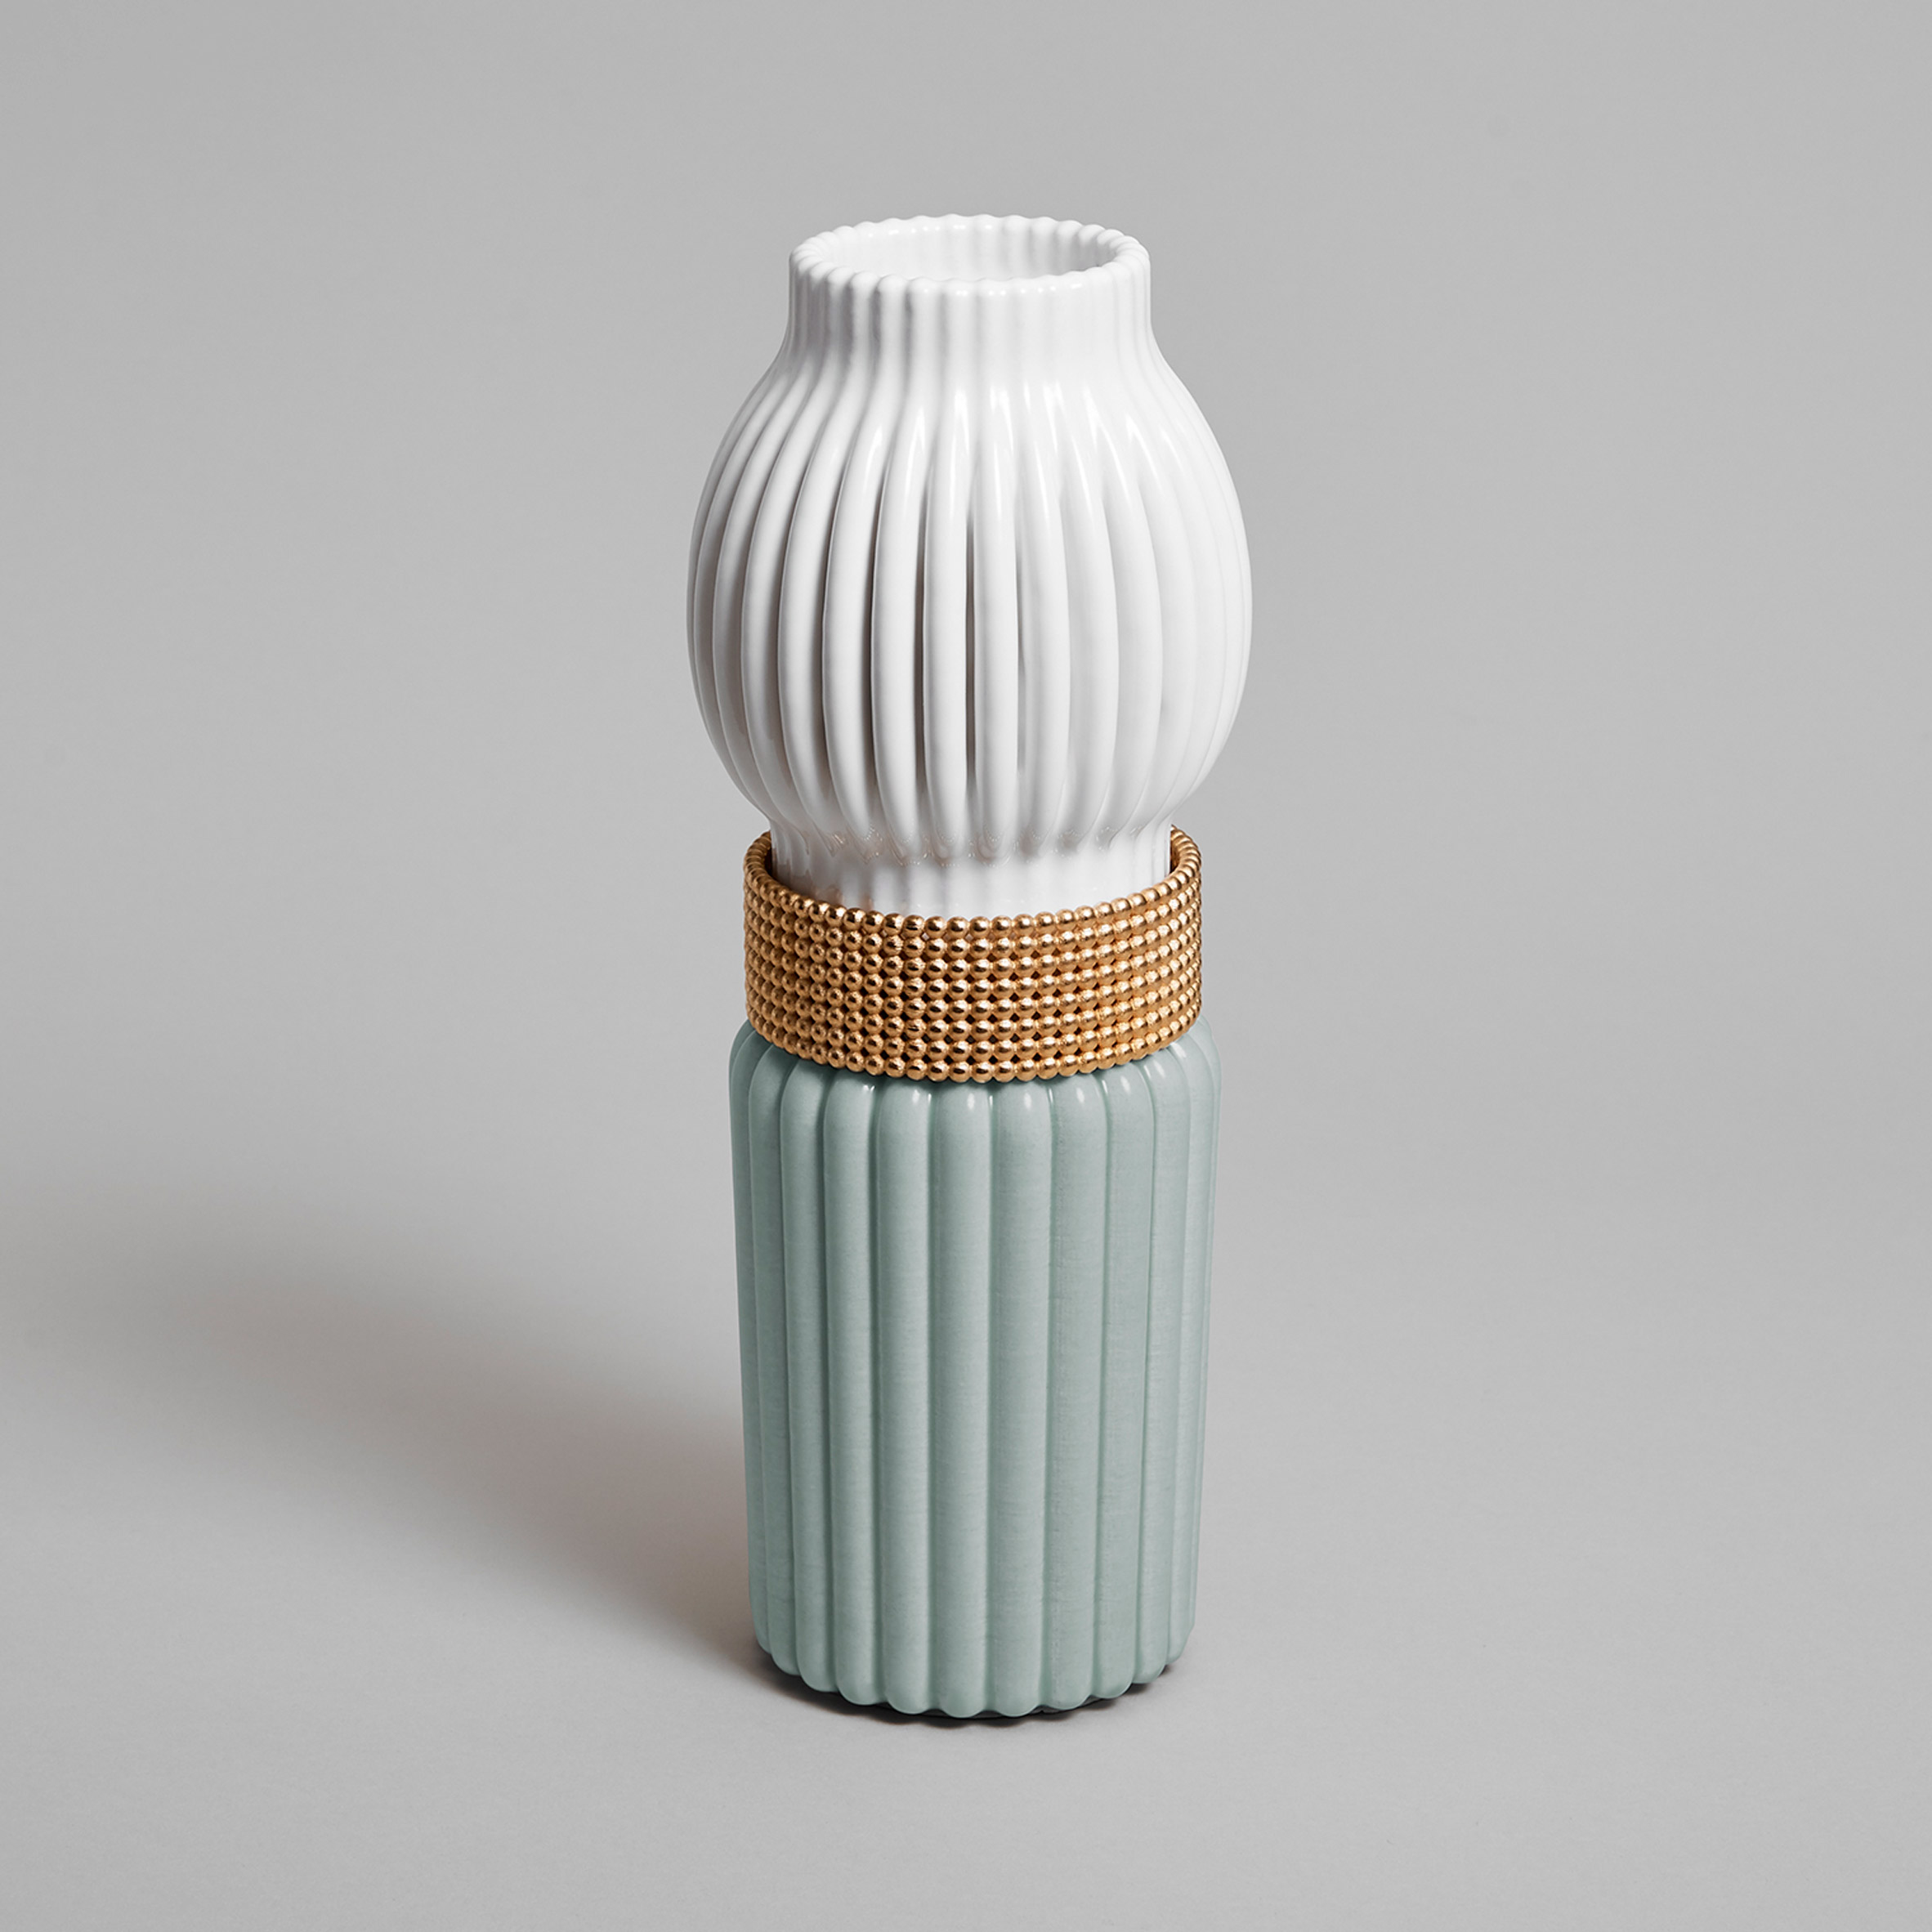 Vase by Marie-Victoire Winckler at Othr x Collective Design Fair